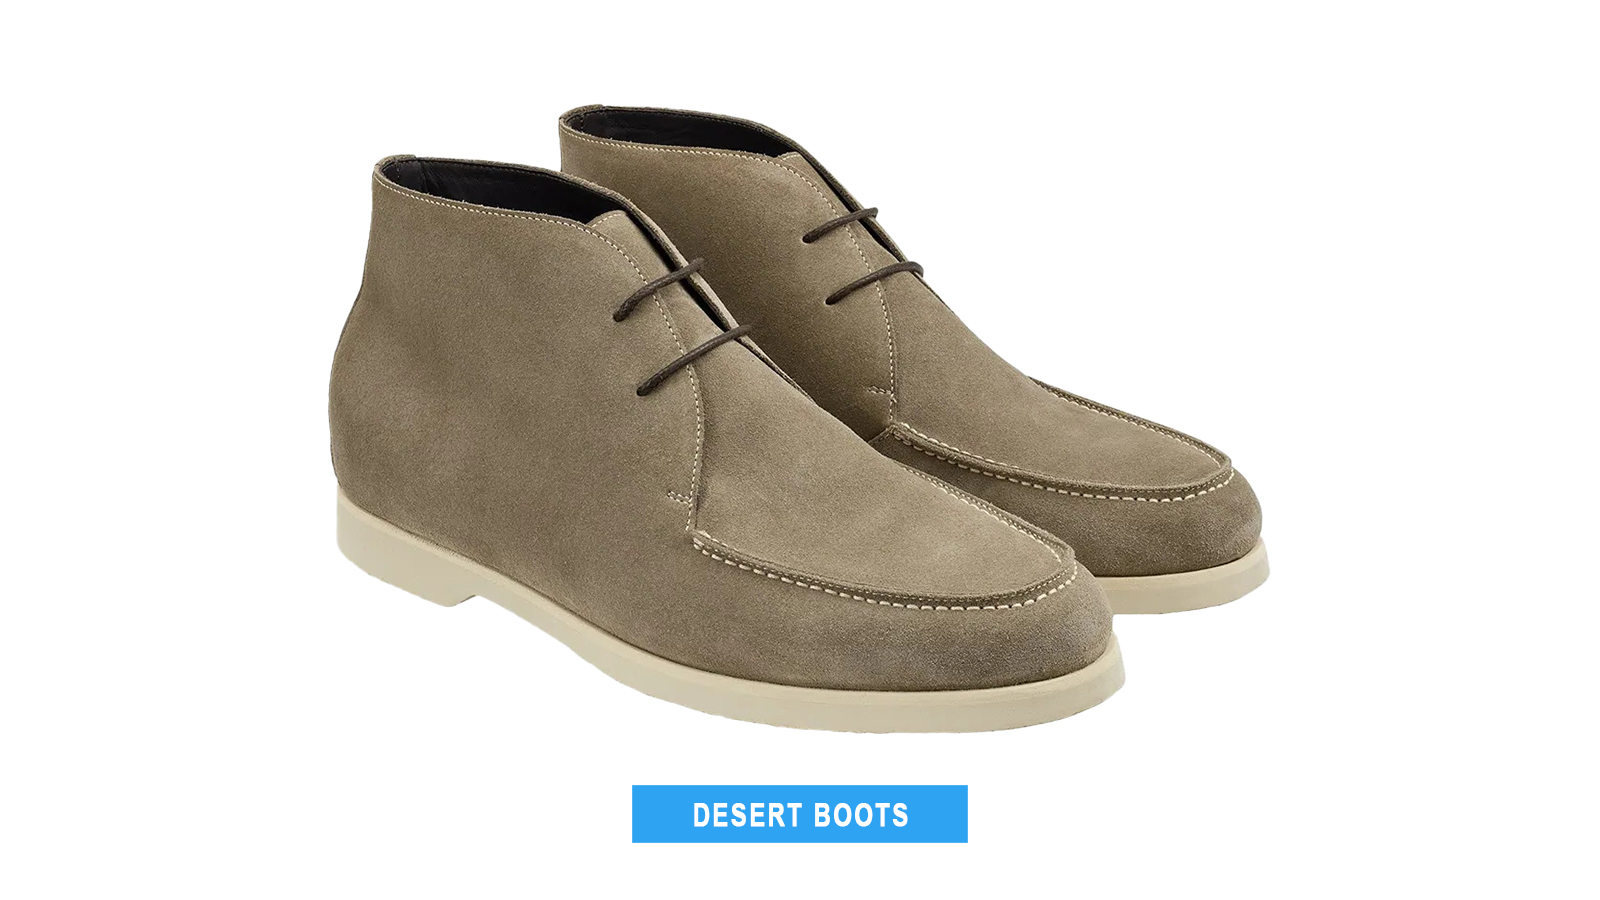 Desert boots style